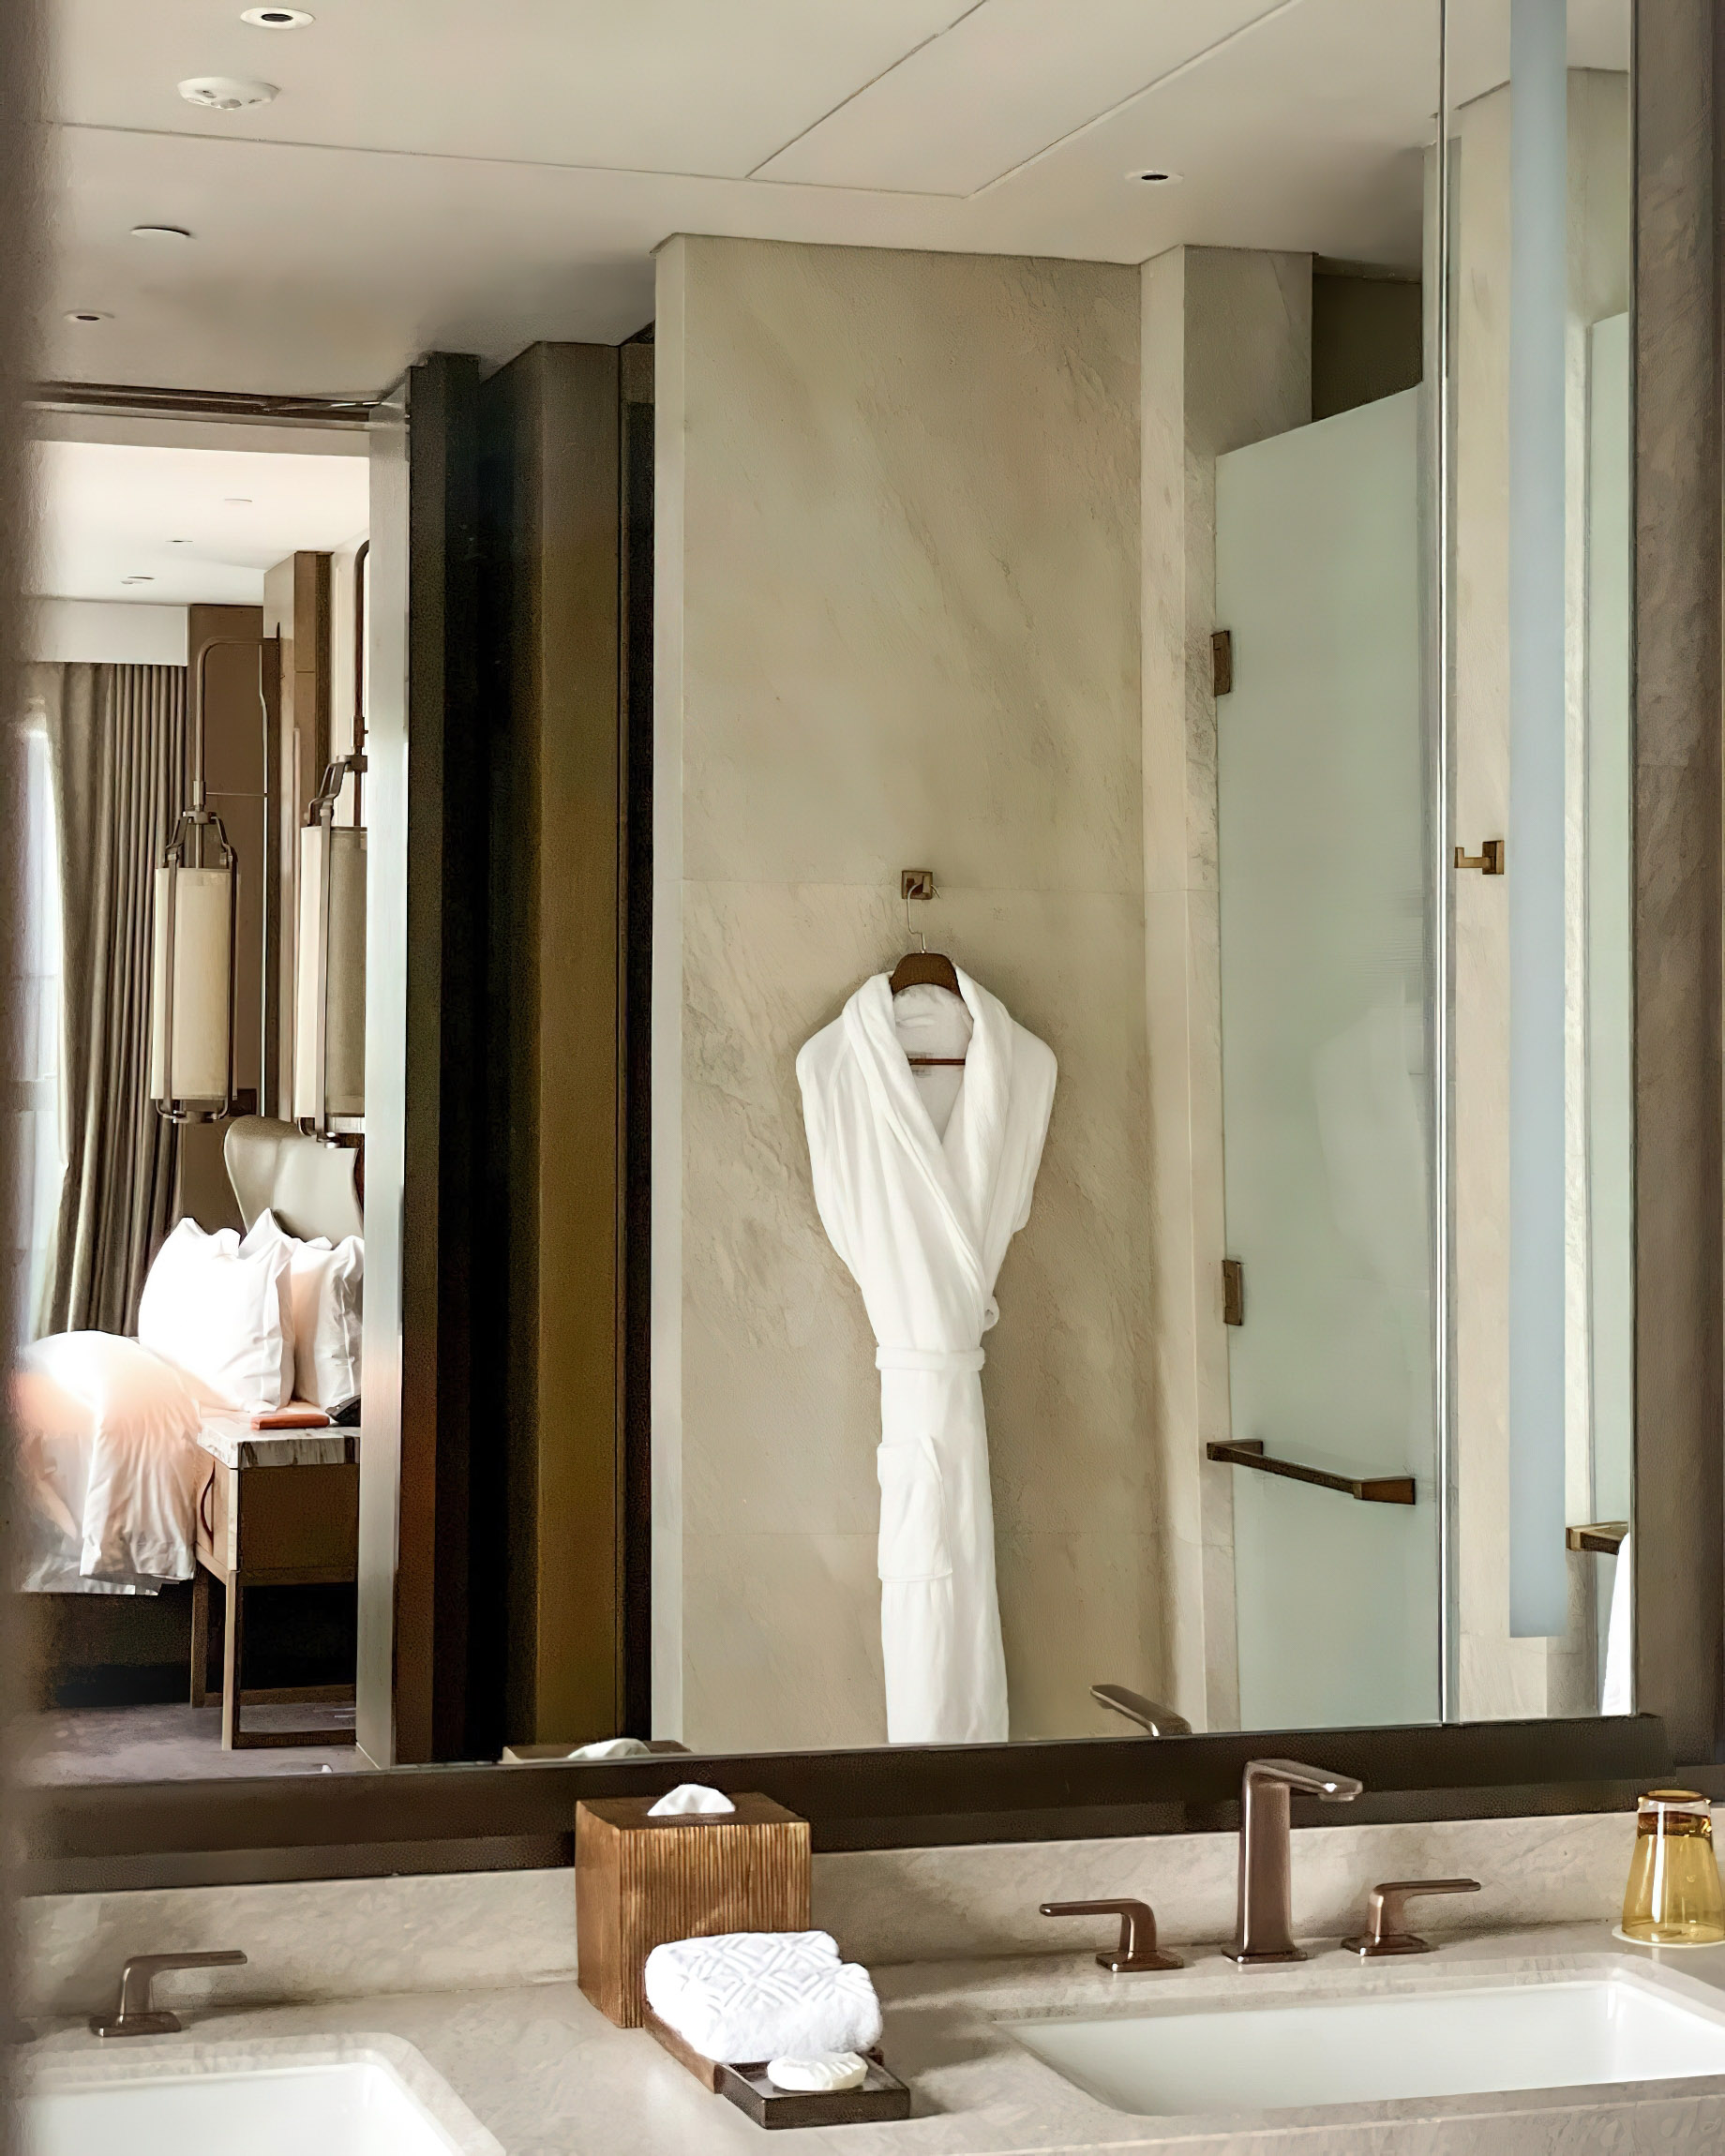 The St. Regis Hong Kong Hotel – Wan Chai, Hong Kong – Bathroom Vanity Mirror View